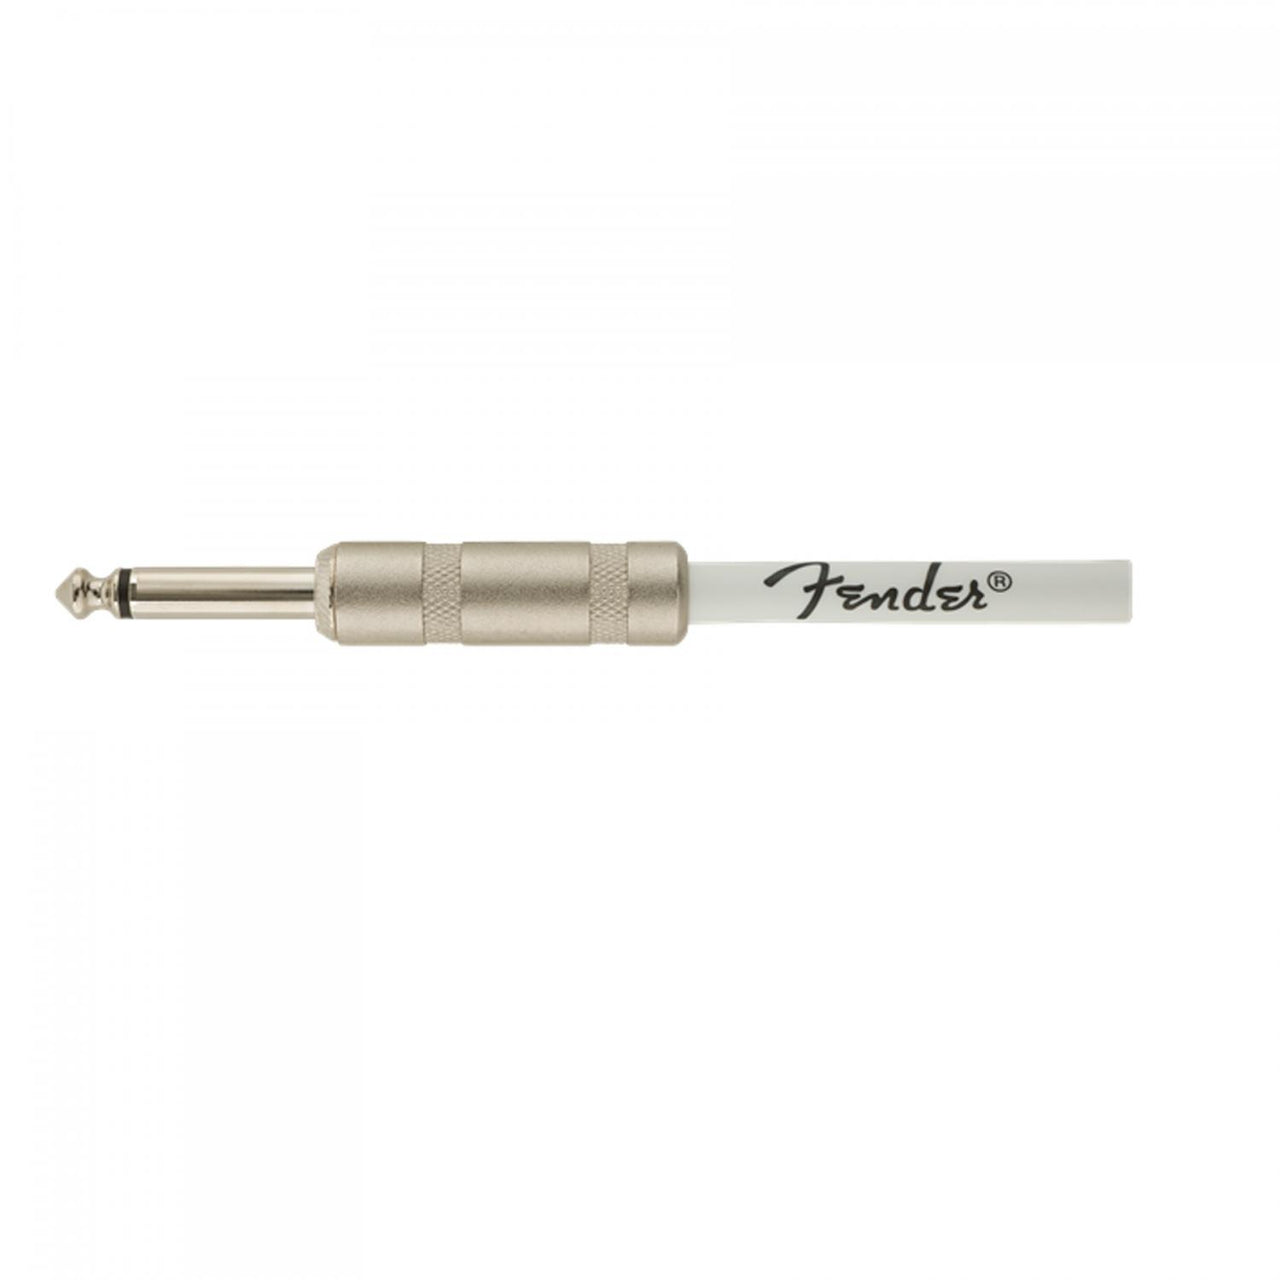 Cable Fender Original Series Para Instrumento 4.5 mts 0990515058